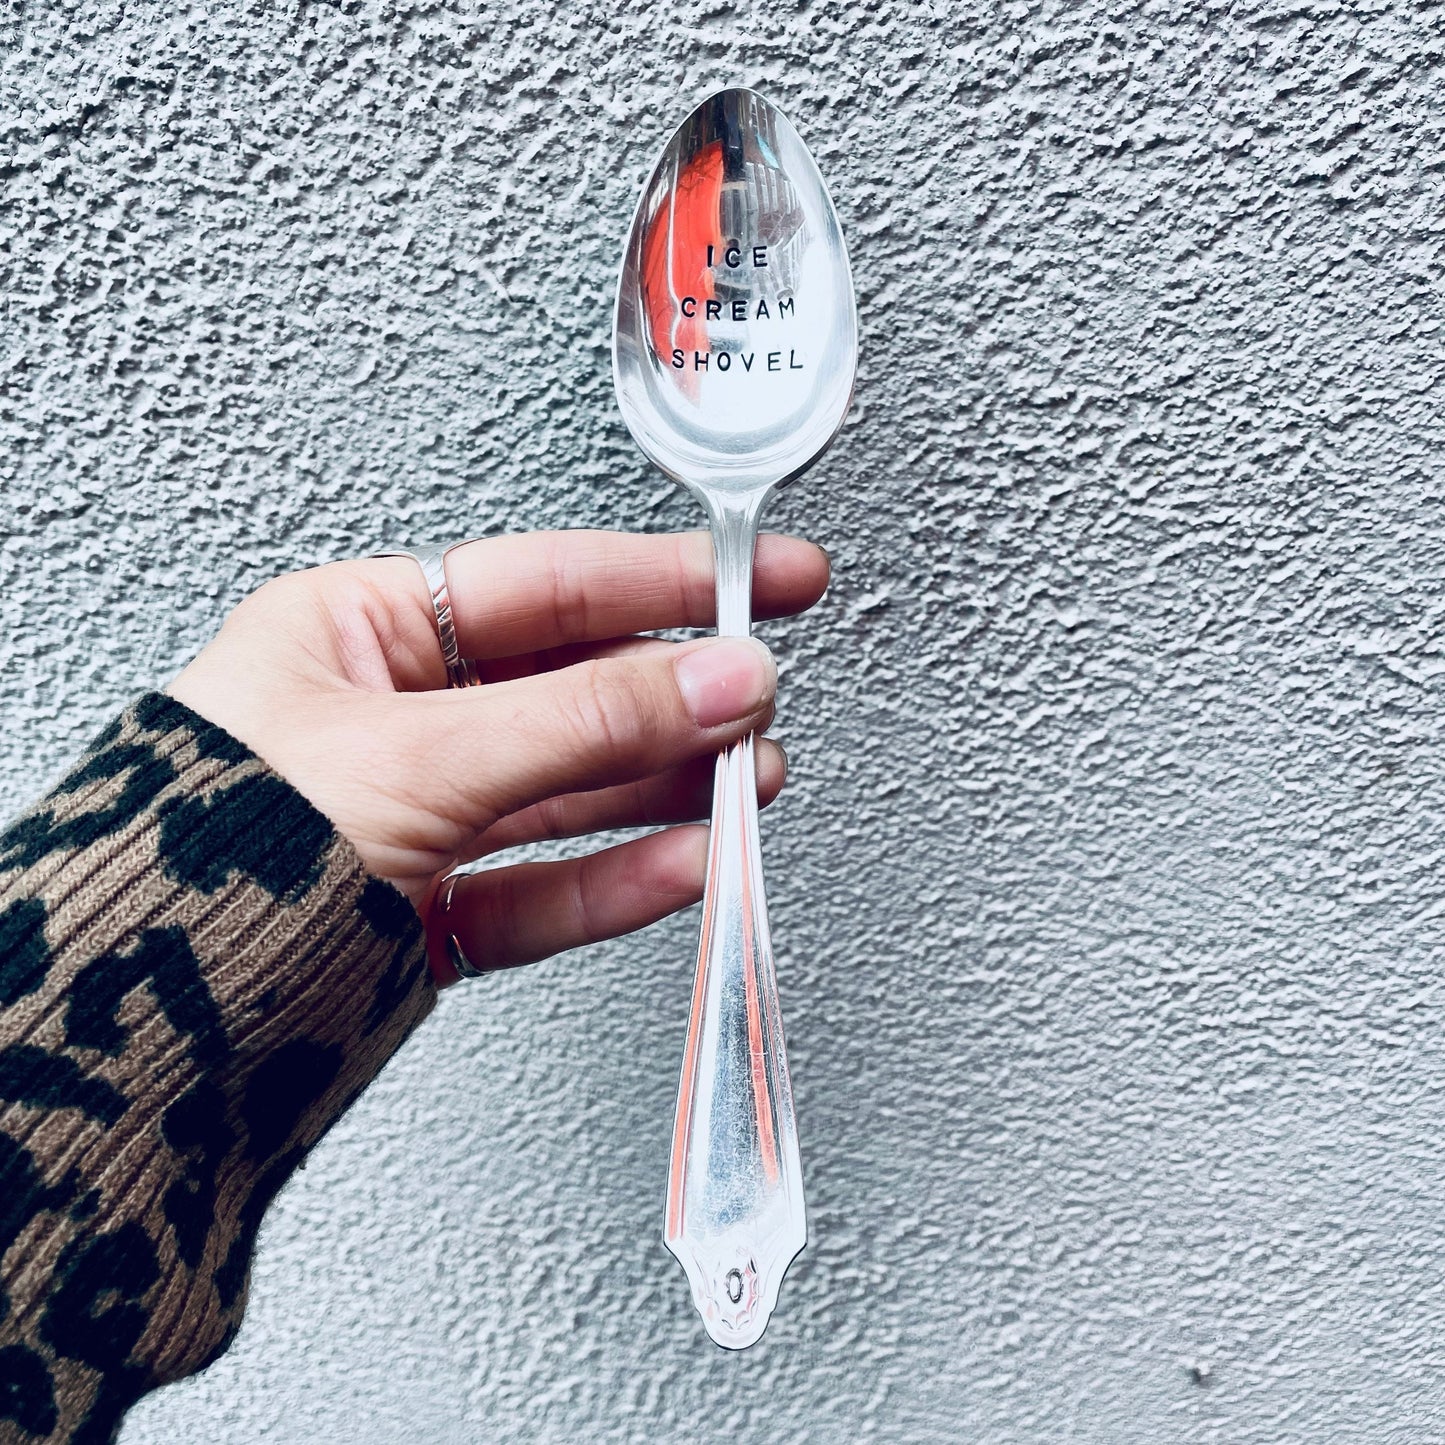 Ice Cream Shovel - Vintage Serving Spoon